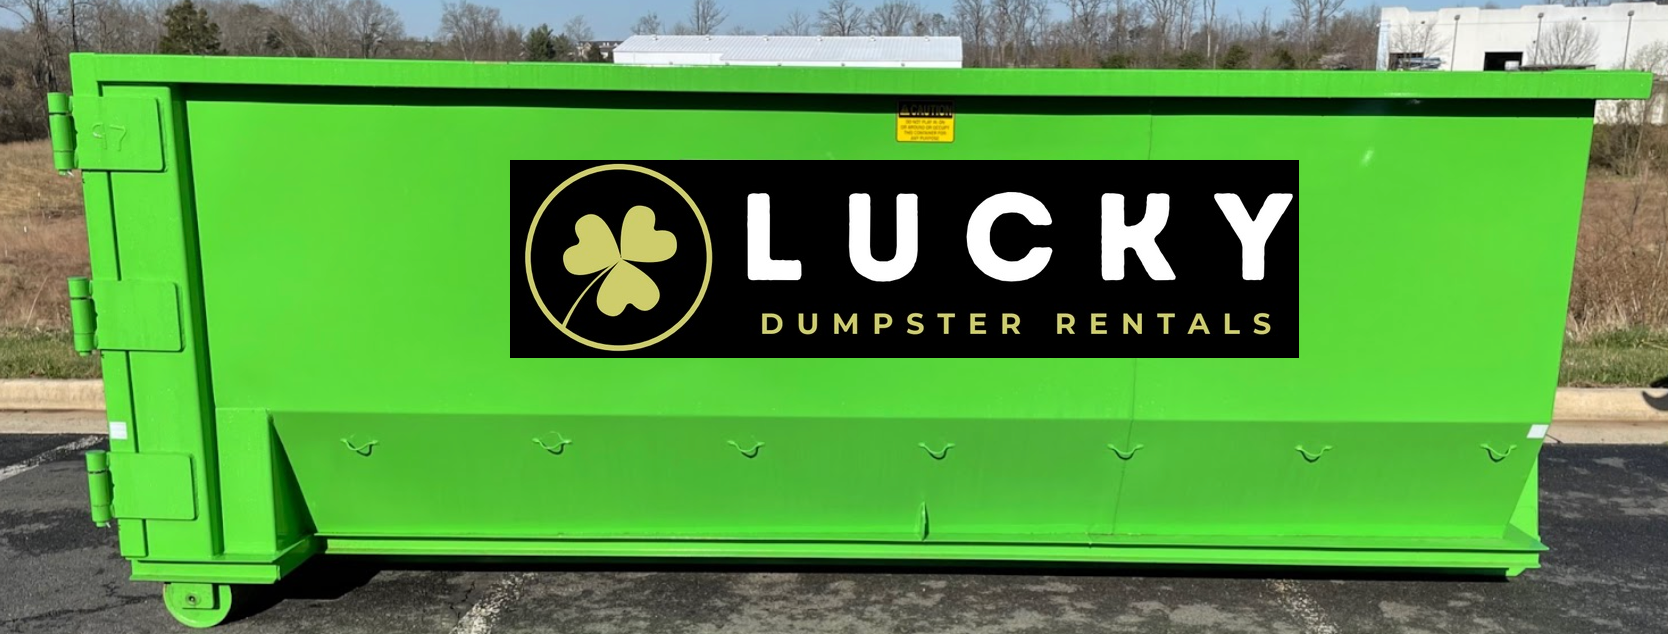 Griffin Dumpster Rental - Lucky Dumpster Rentals of Griffin, GA